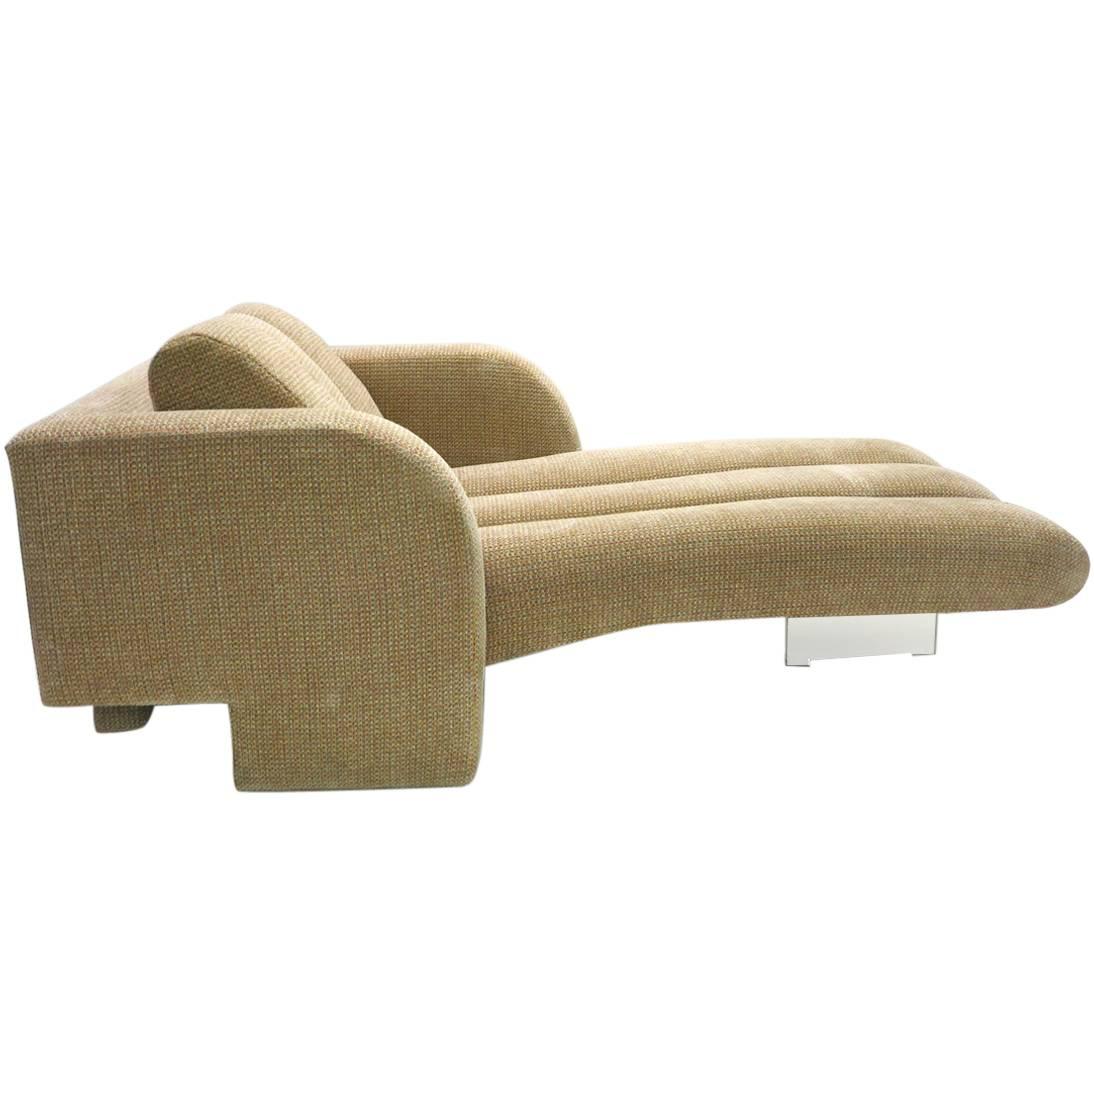 Chaise Longue / Lounge Chair by Vladimir Kagan, USA 1970s